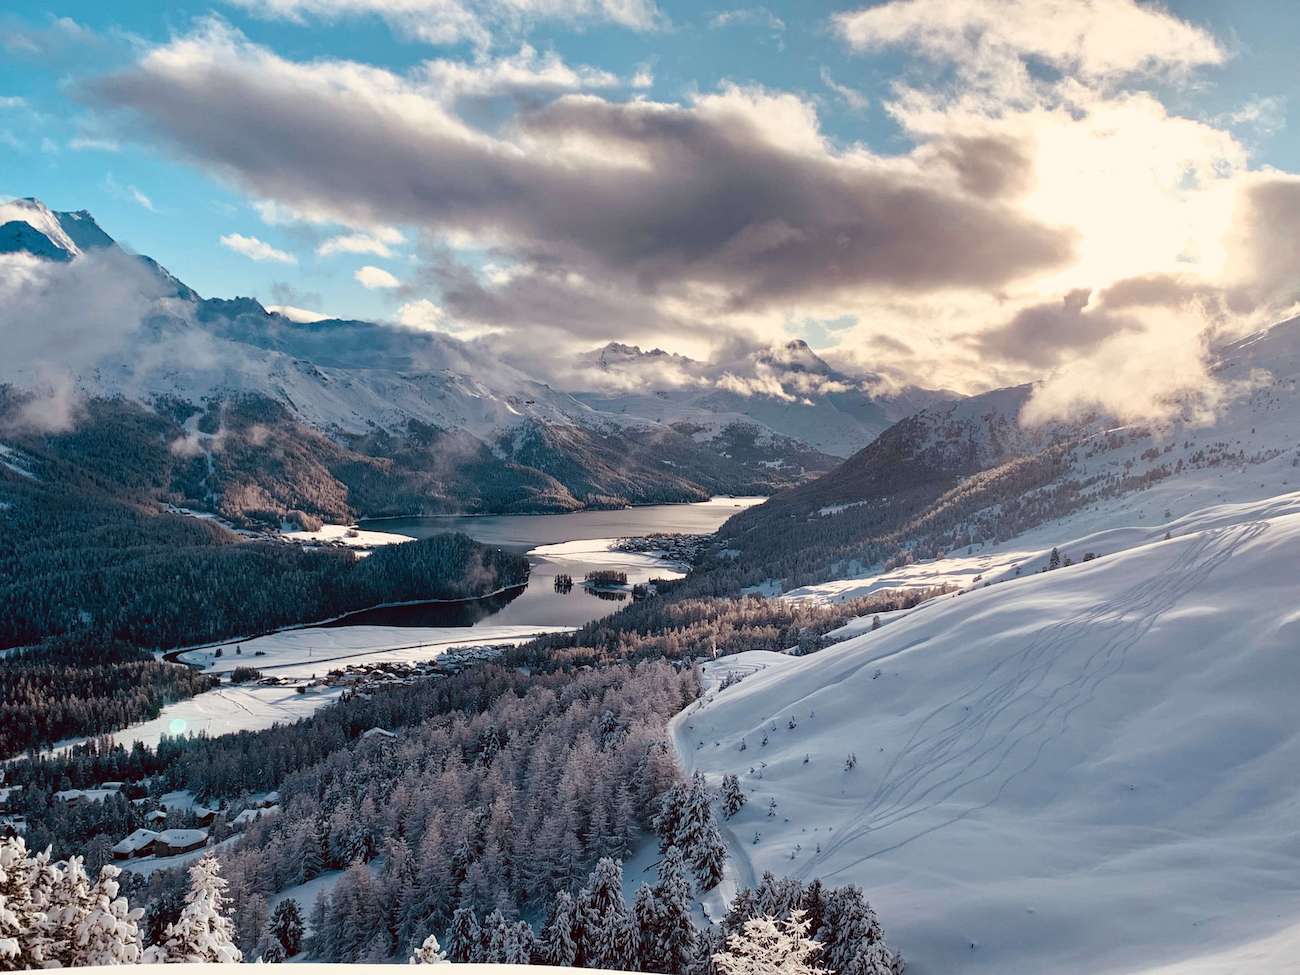 St. Moritz Ski Resort